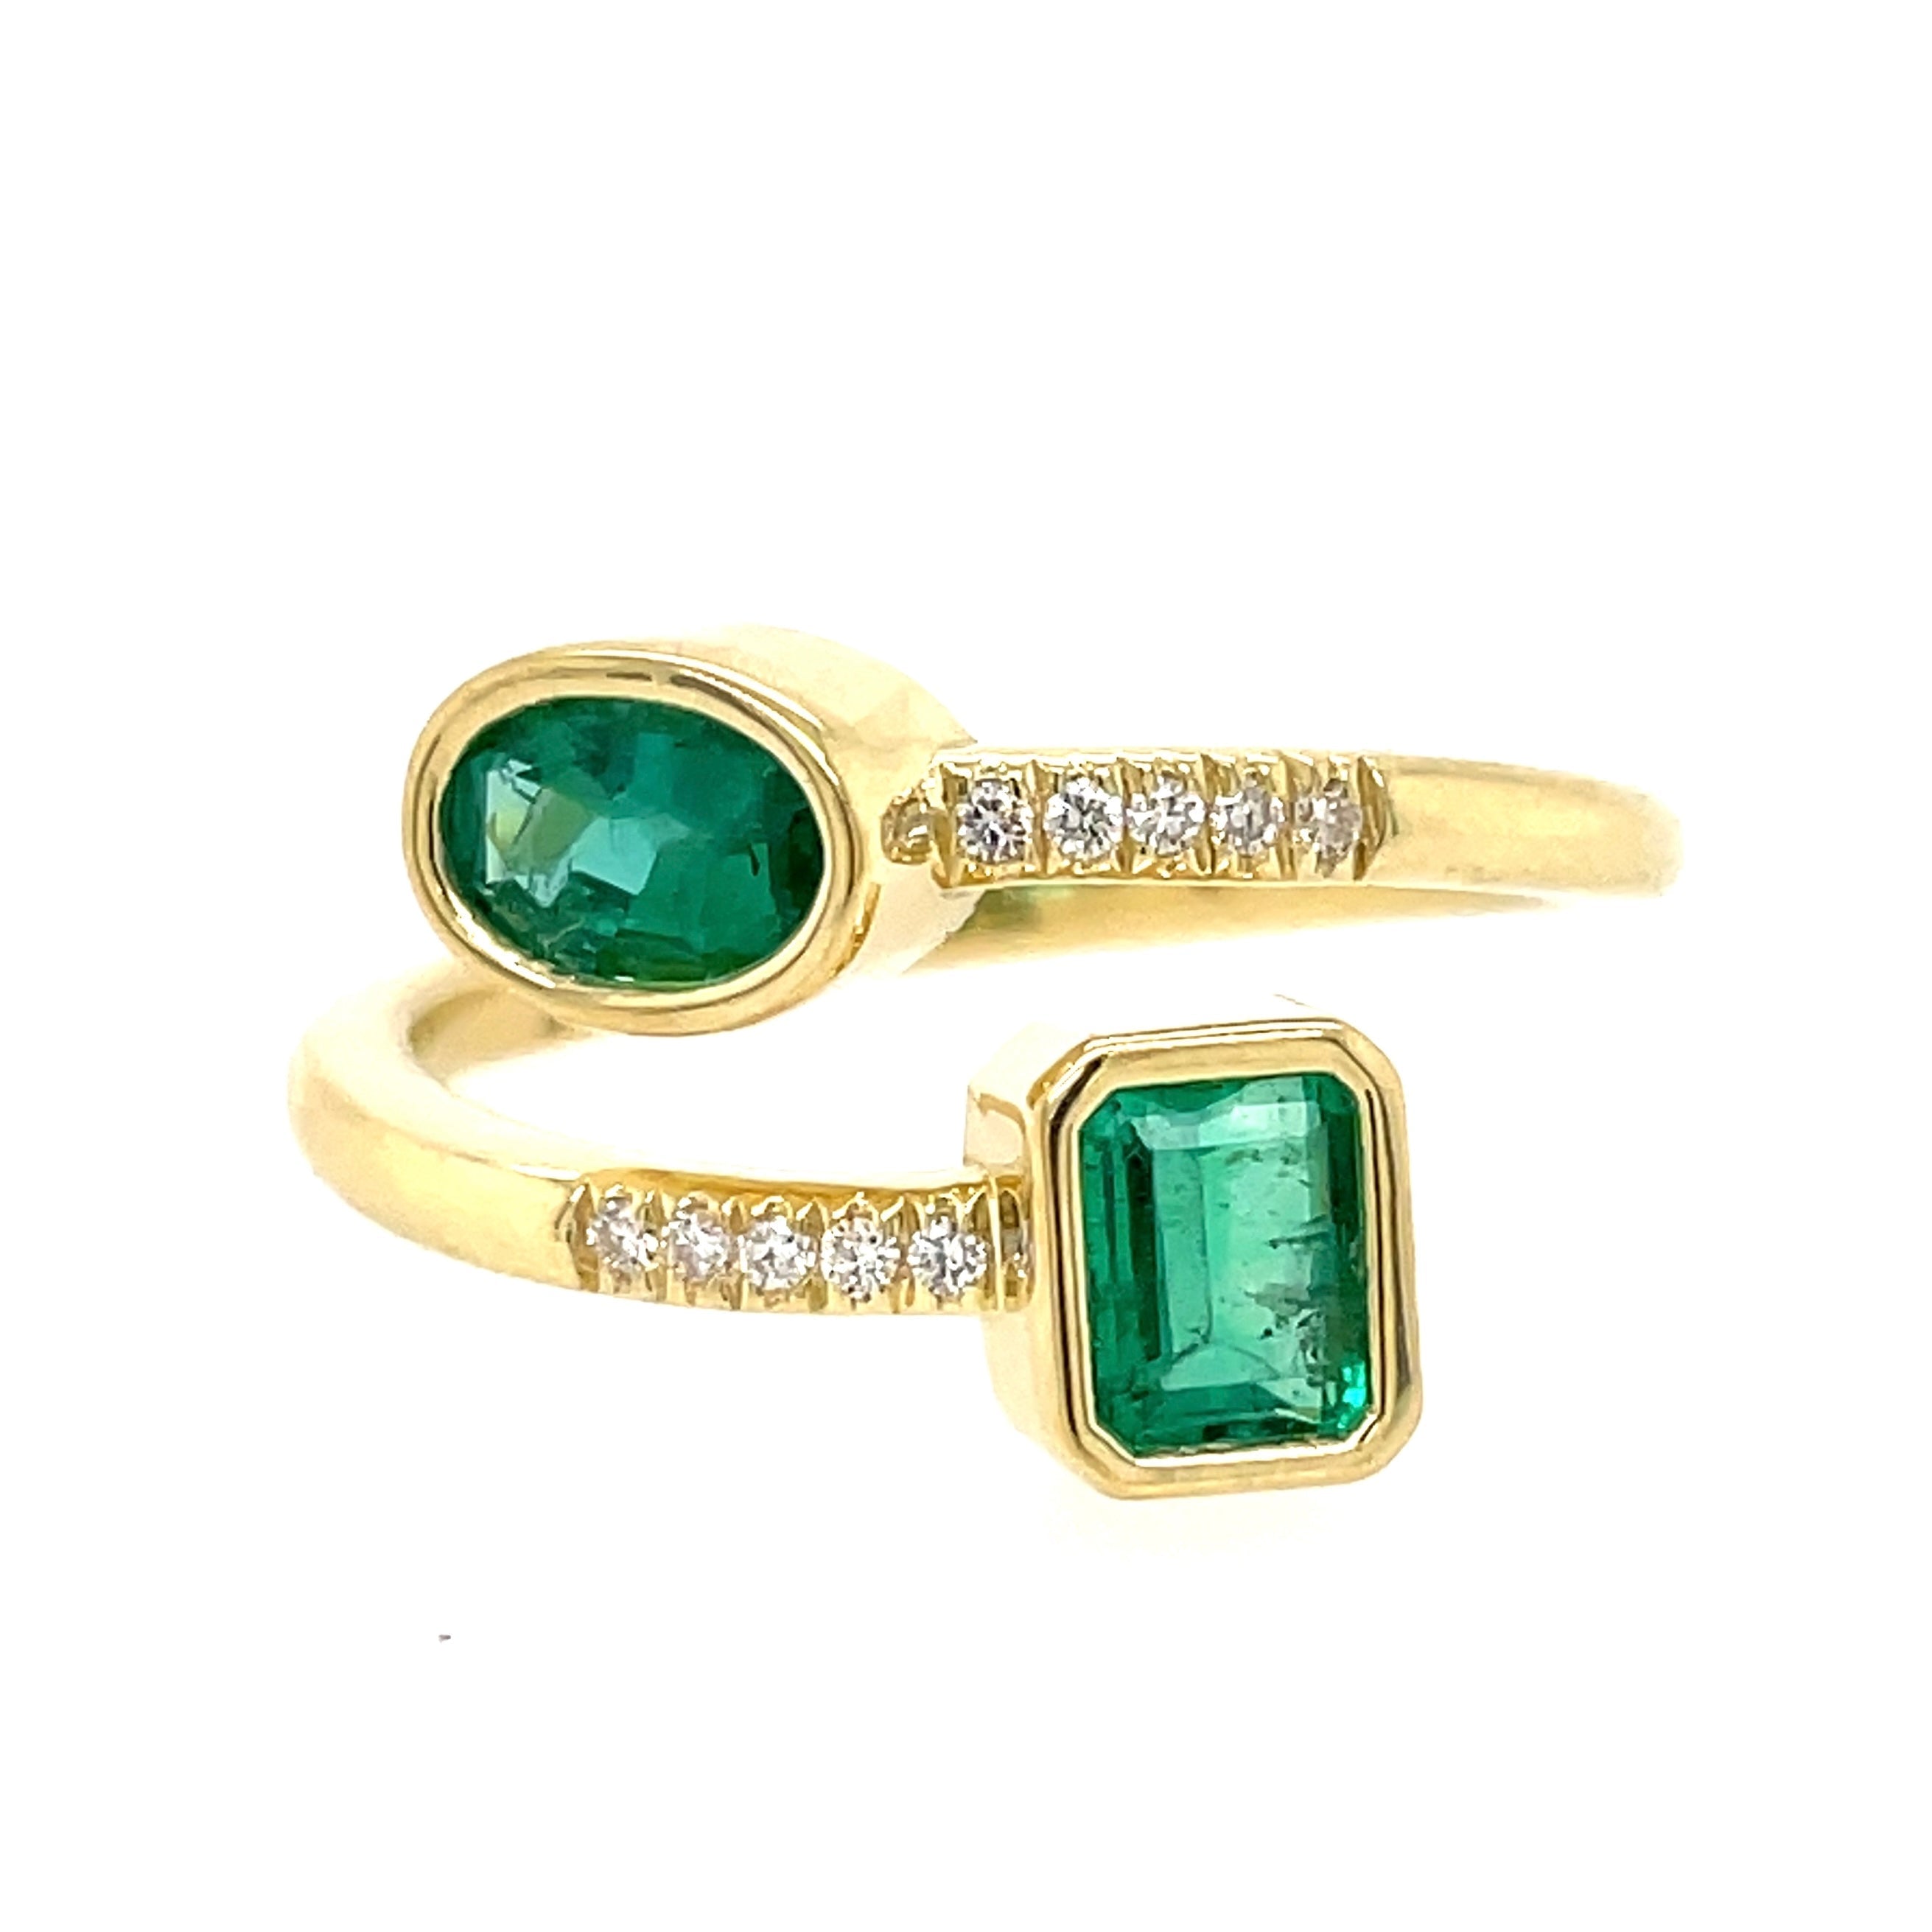 Lauren K oval and rectangular emerald cut emerald bypass ring - Be On Park